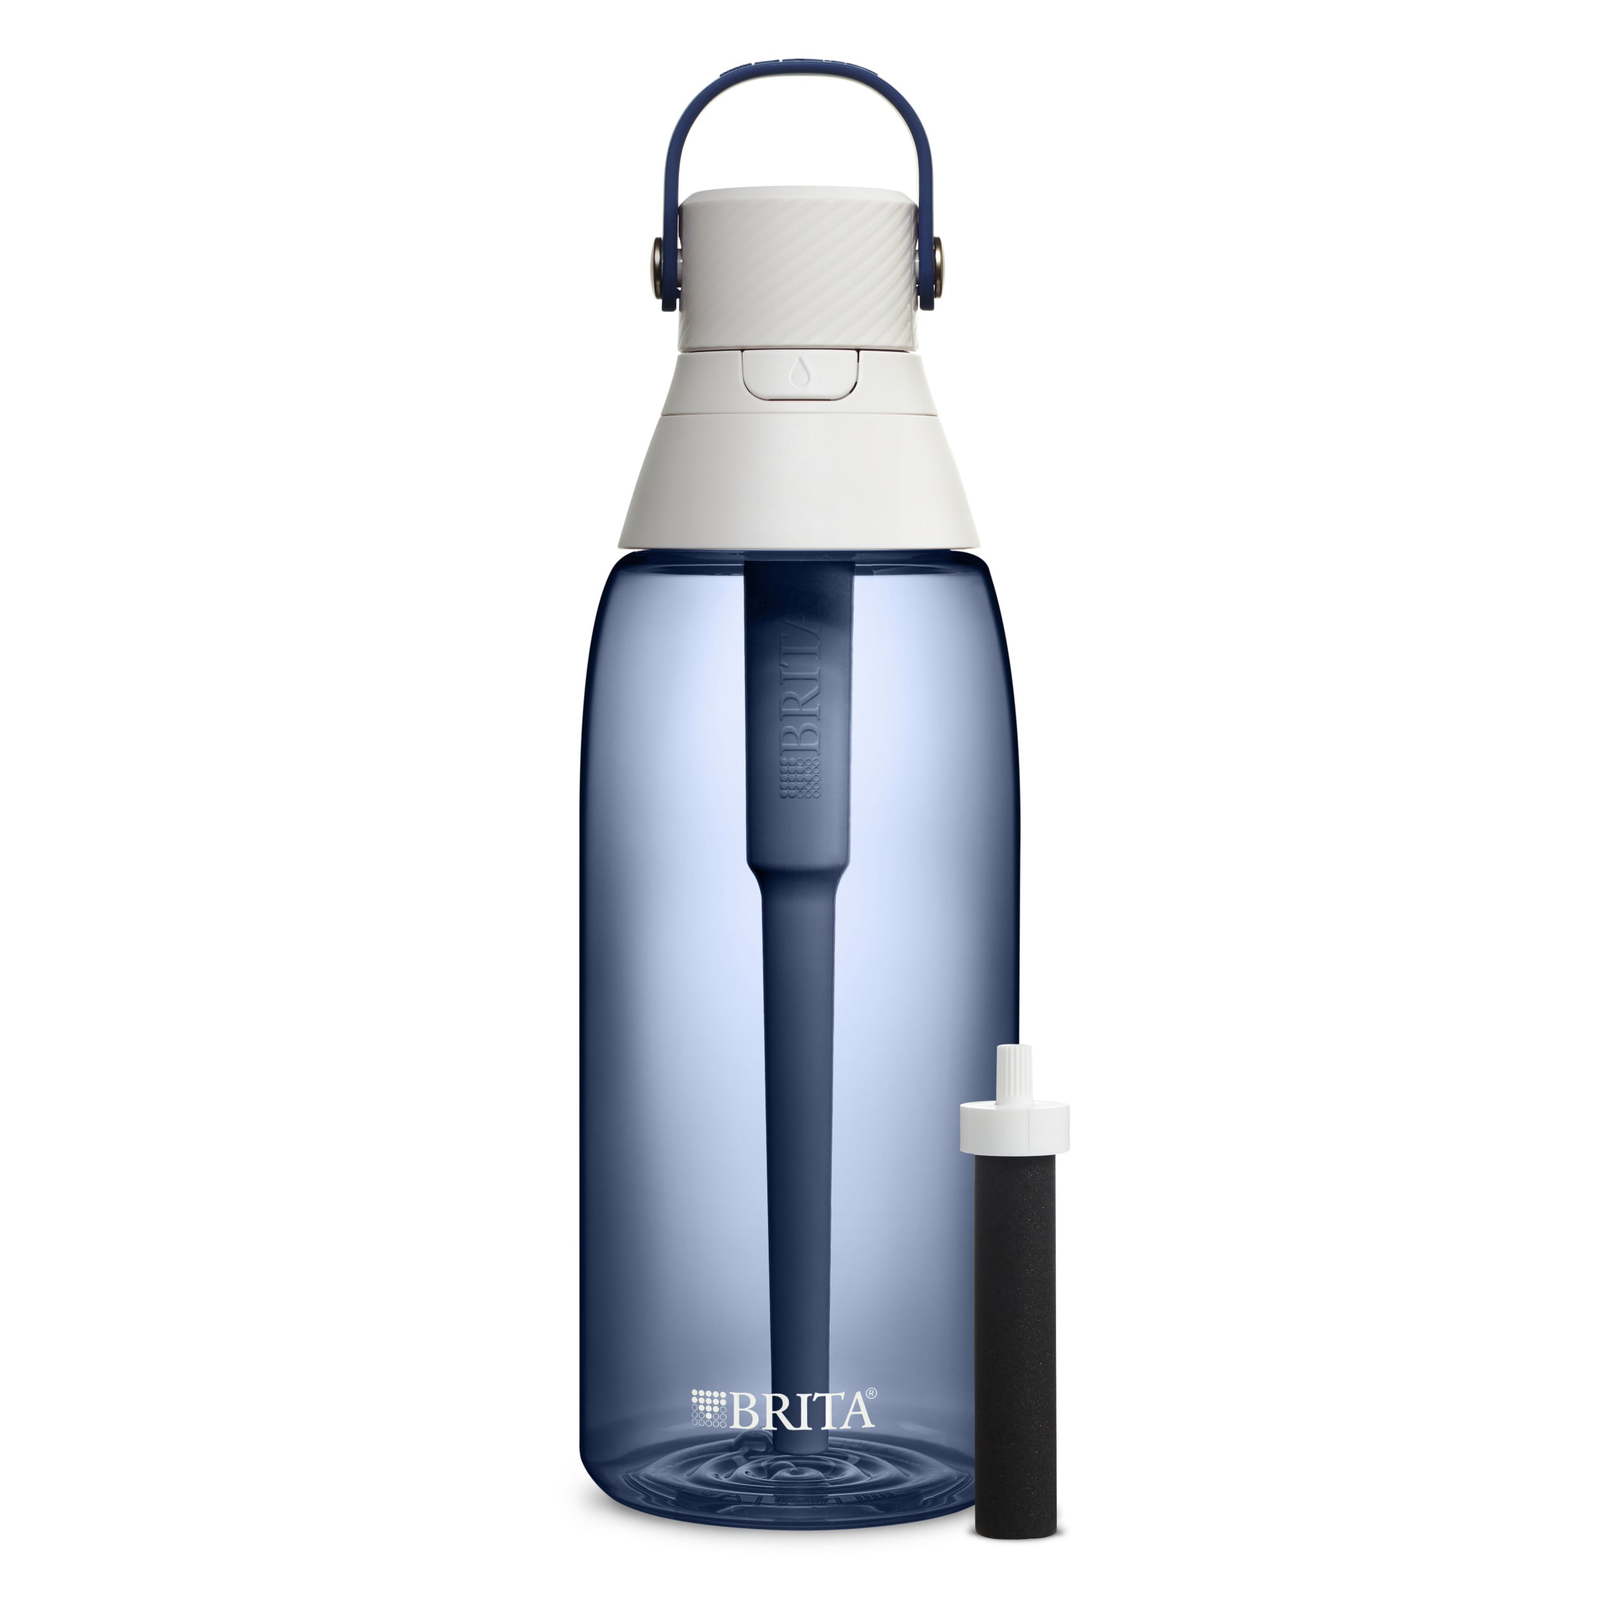 Brita Premium Filtering Water Bottle 36 oz - Night Sky - $39.45